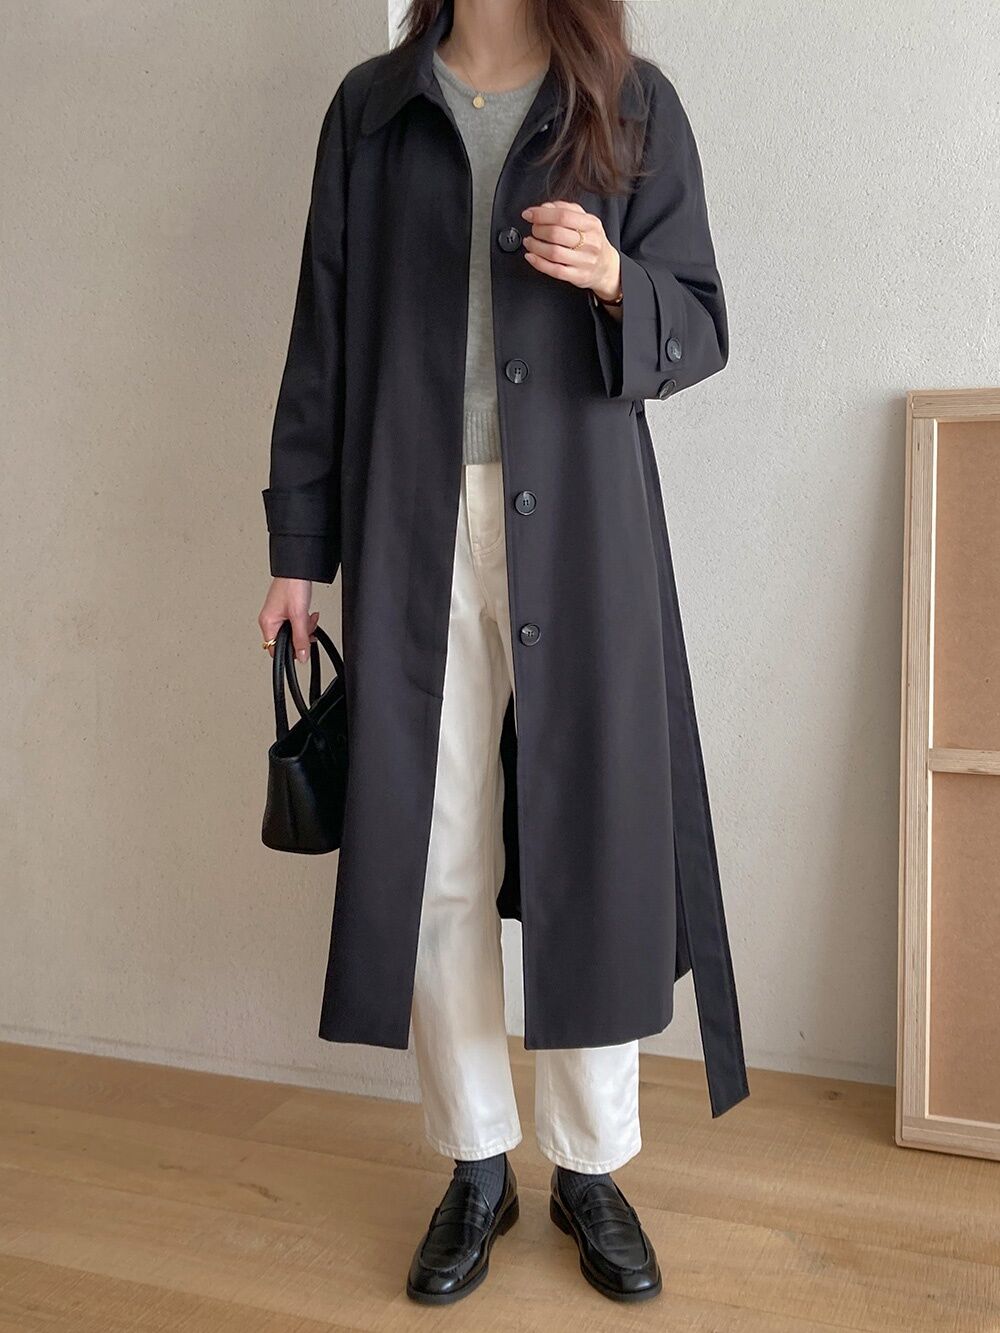 Niche pinched waist coat Korean style windbreaker